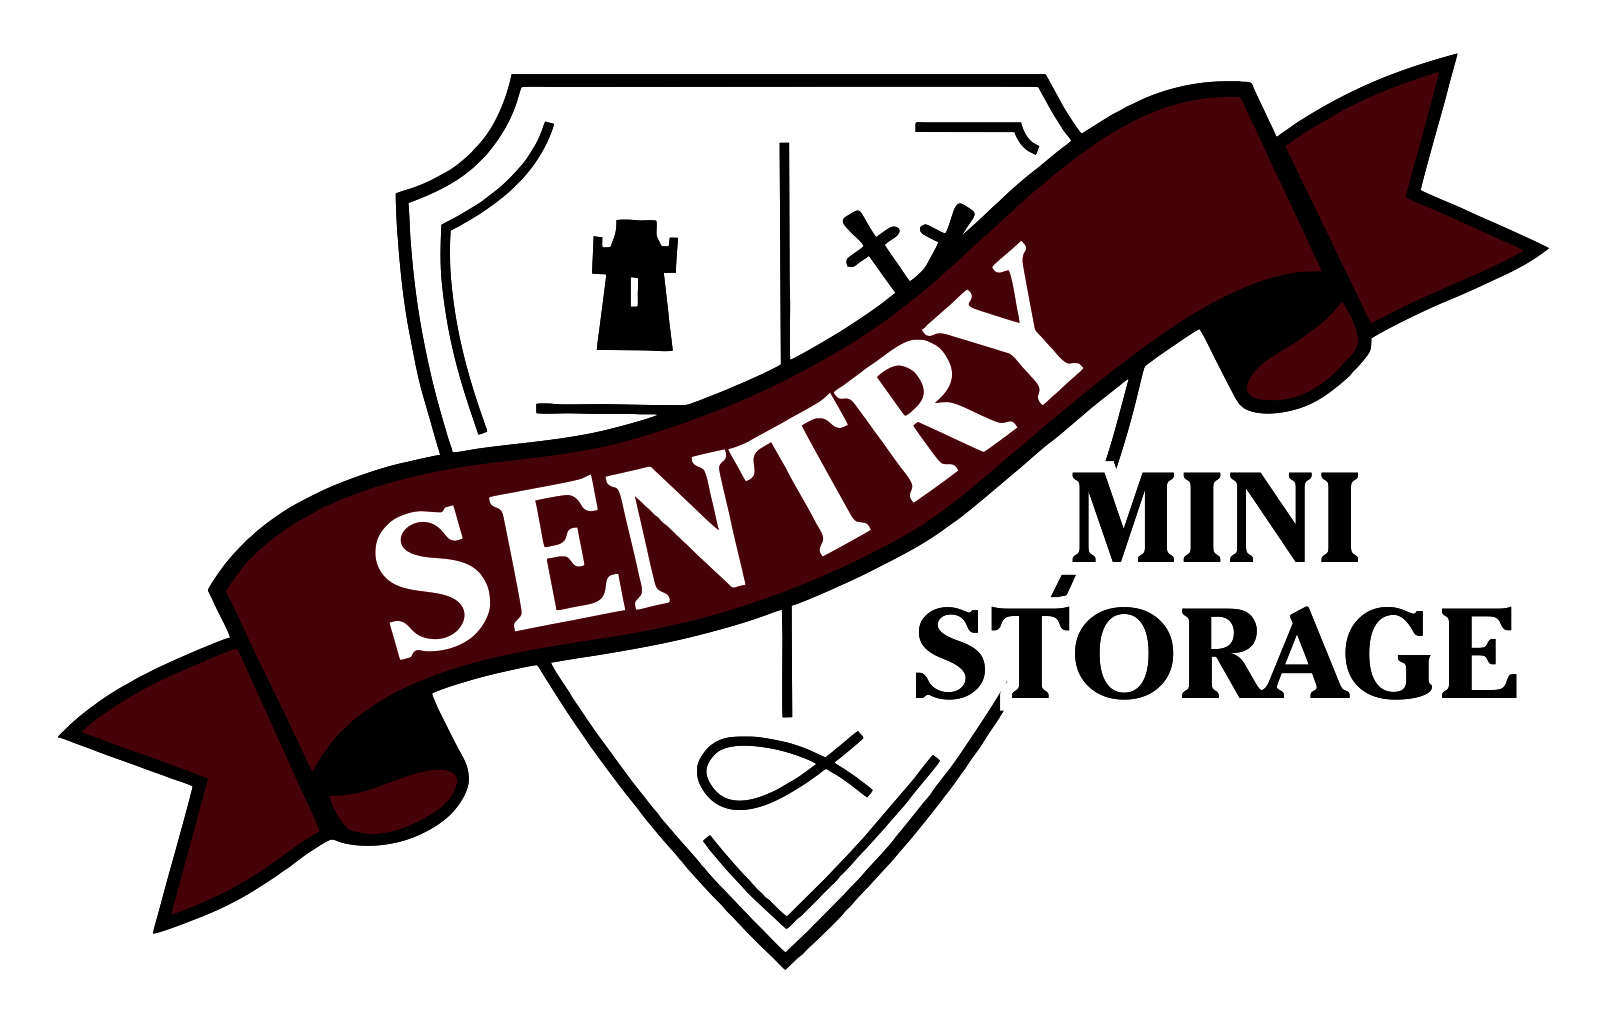 Sentry Mini Storage in Shelton, WA